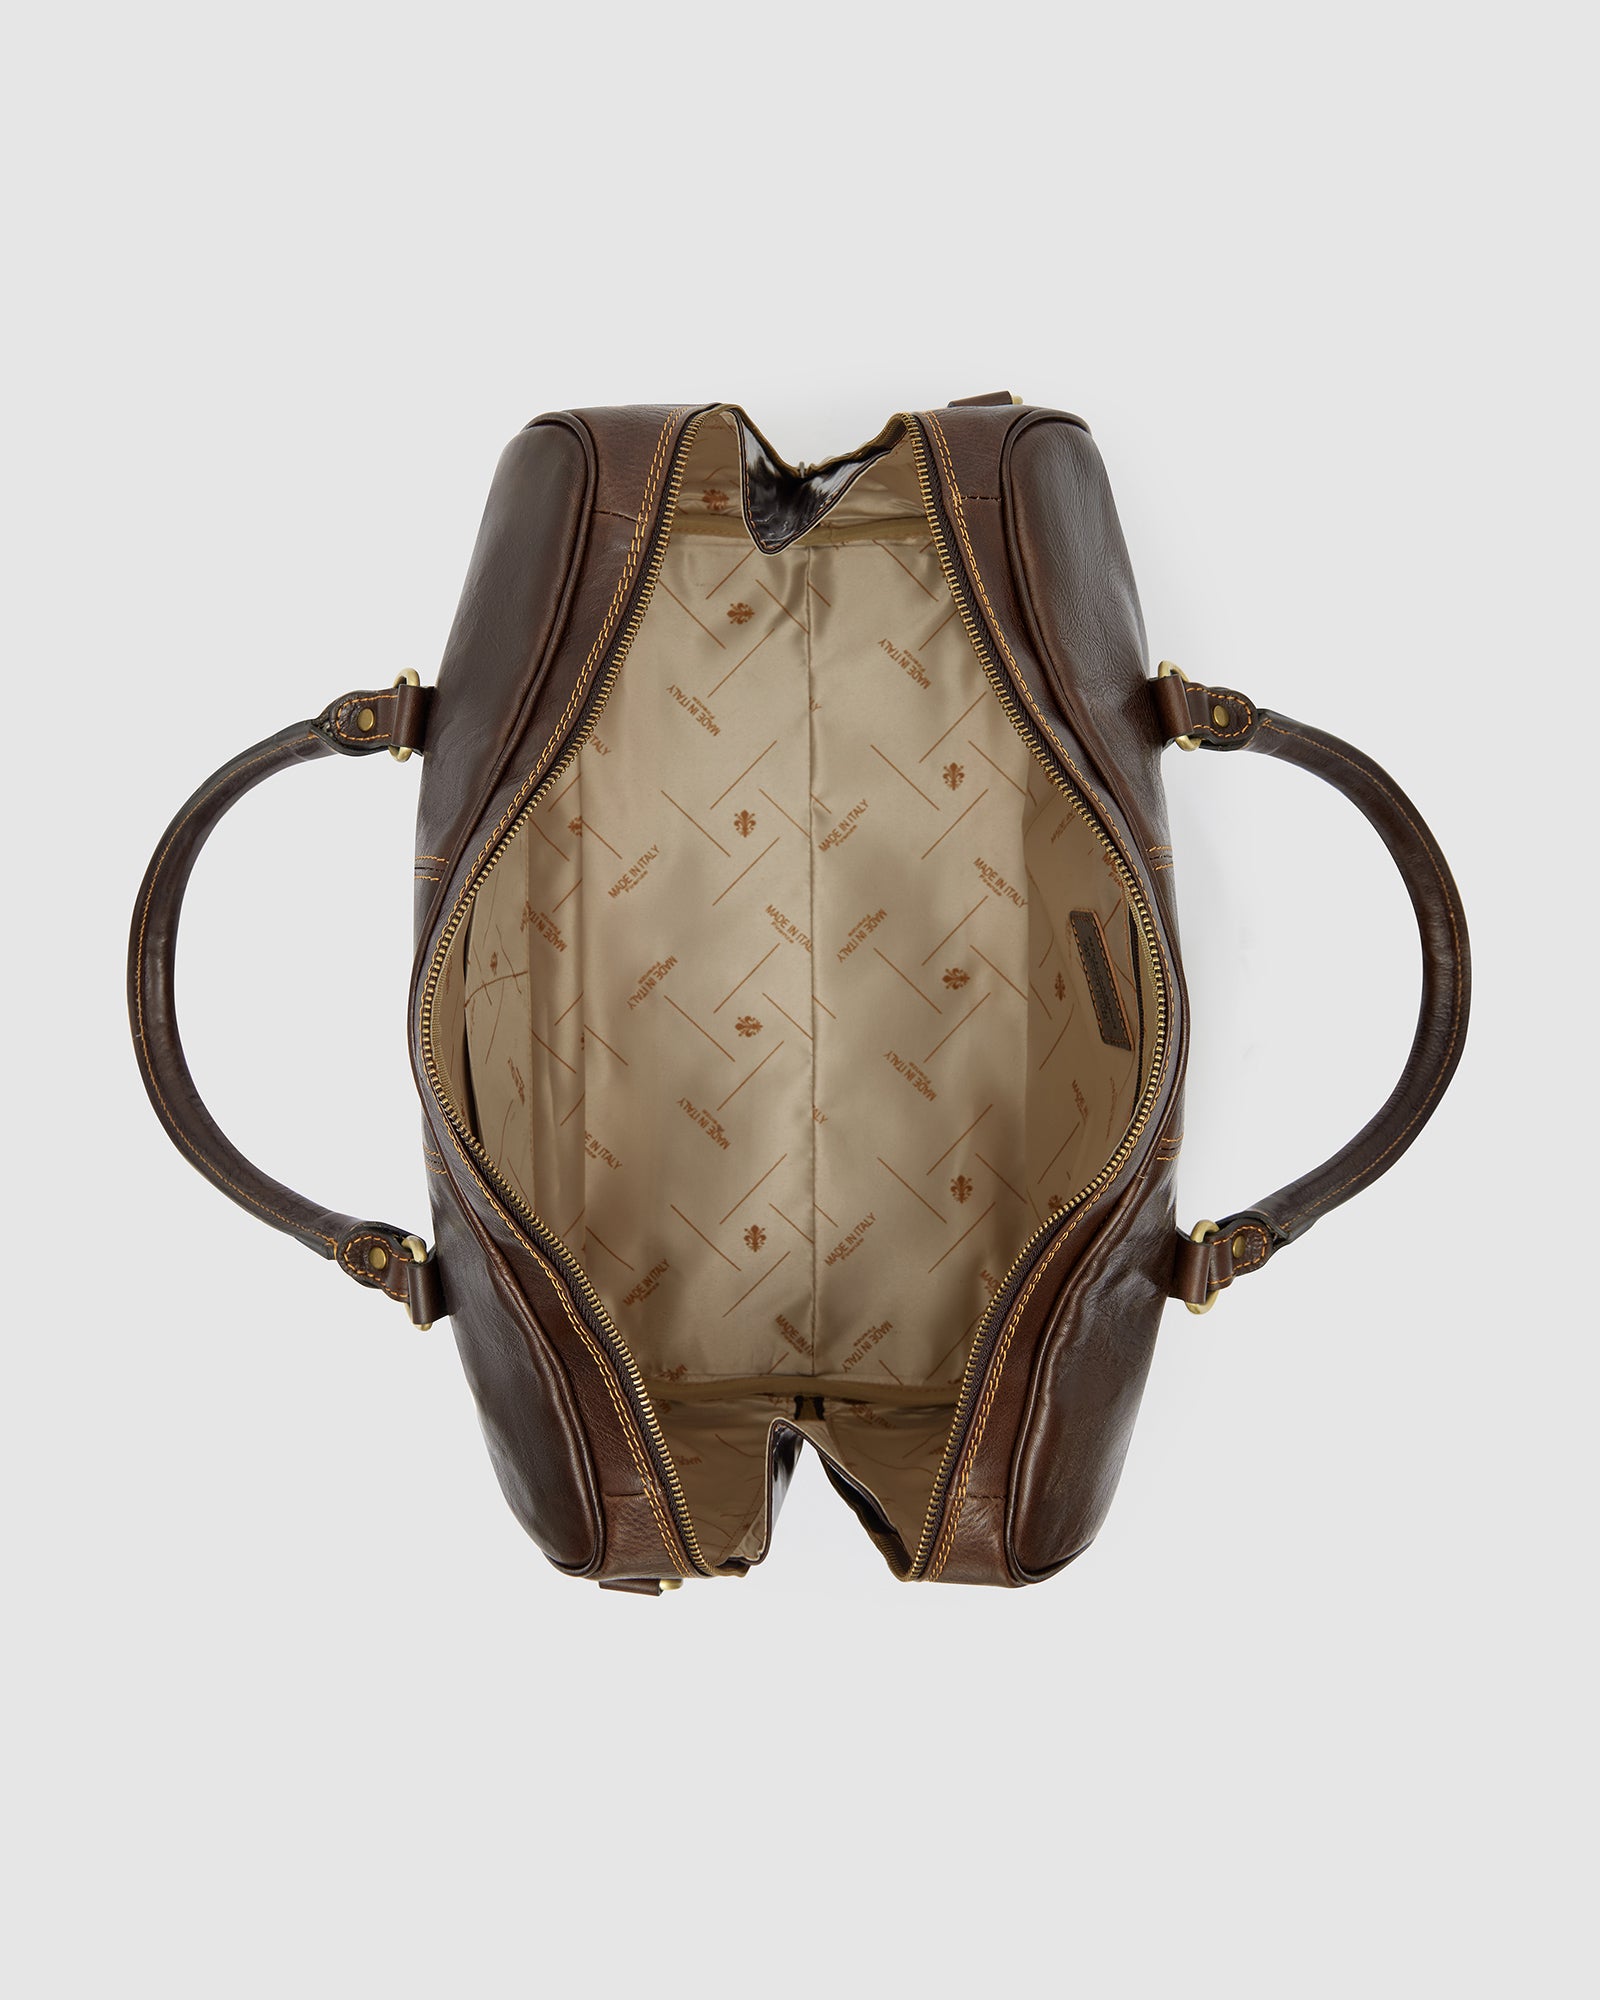 Albertis Piccolo Chocolate - Leather Duffle Bag